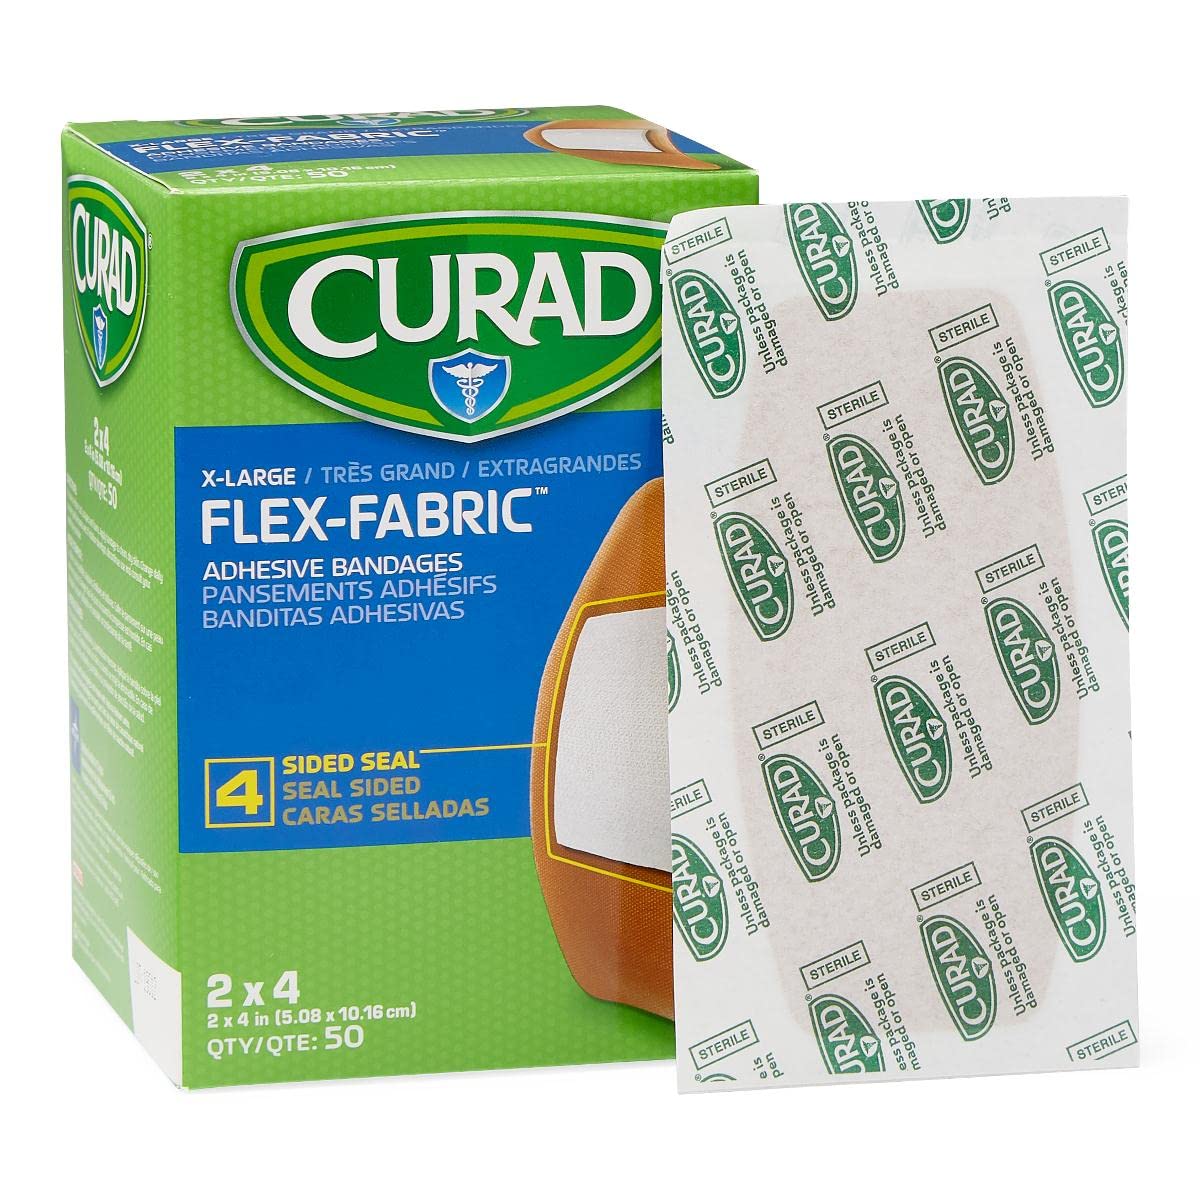 Medline Curad Fabric Adhesive Bandages, Natural, 50 Count